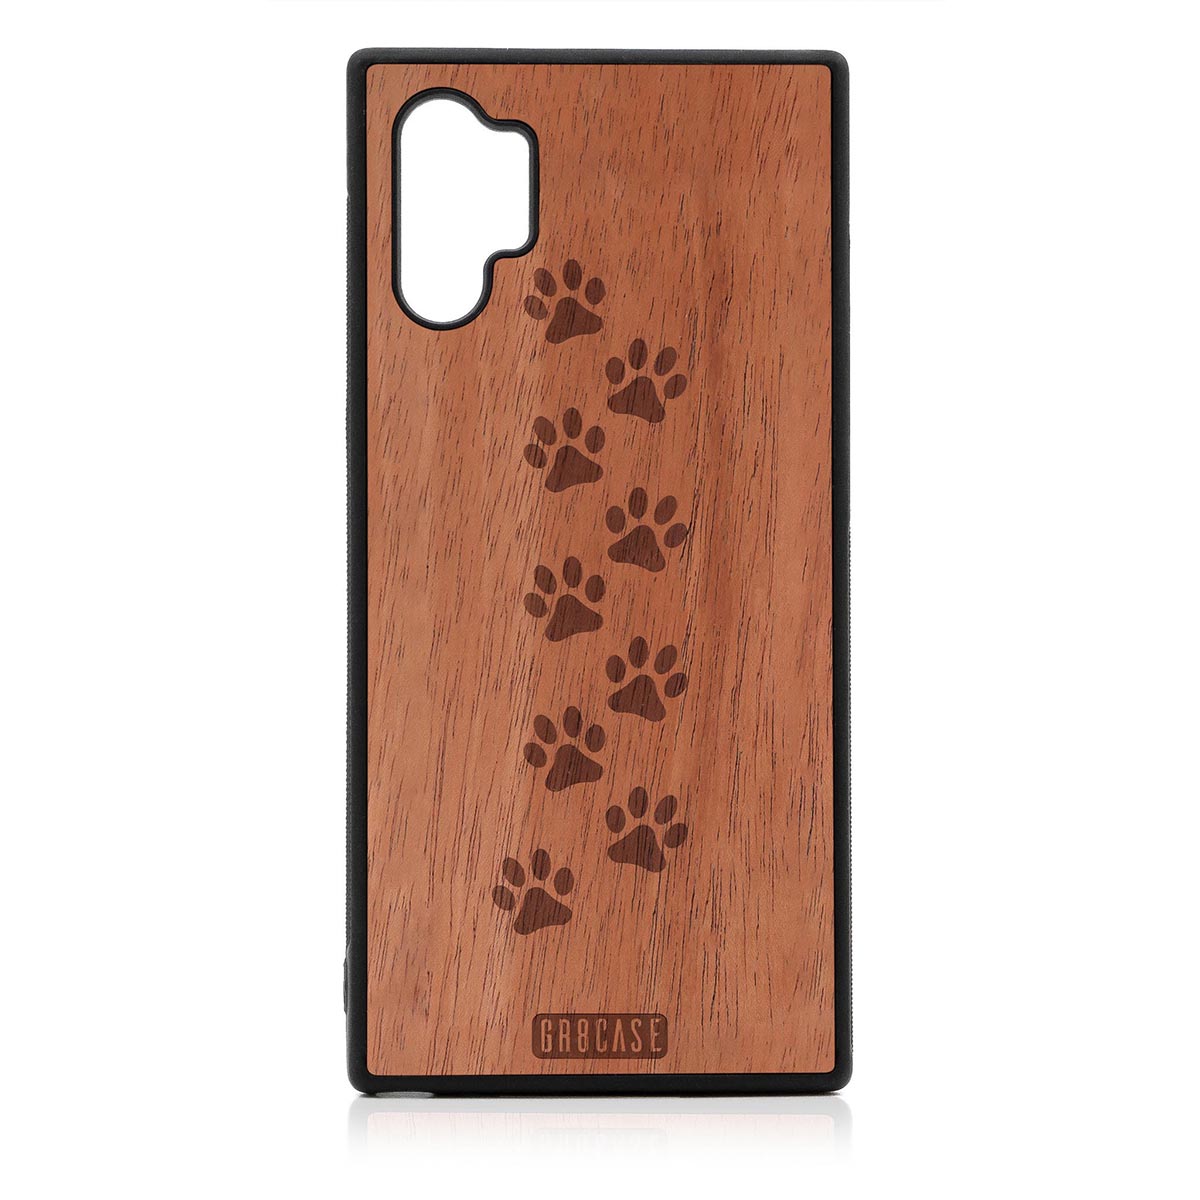 Paw Prints Design Wood Case Samsung Galaxy Note 10 Plus by GR8CASE